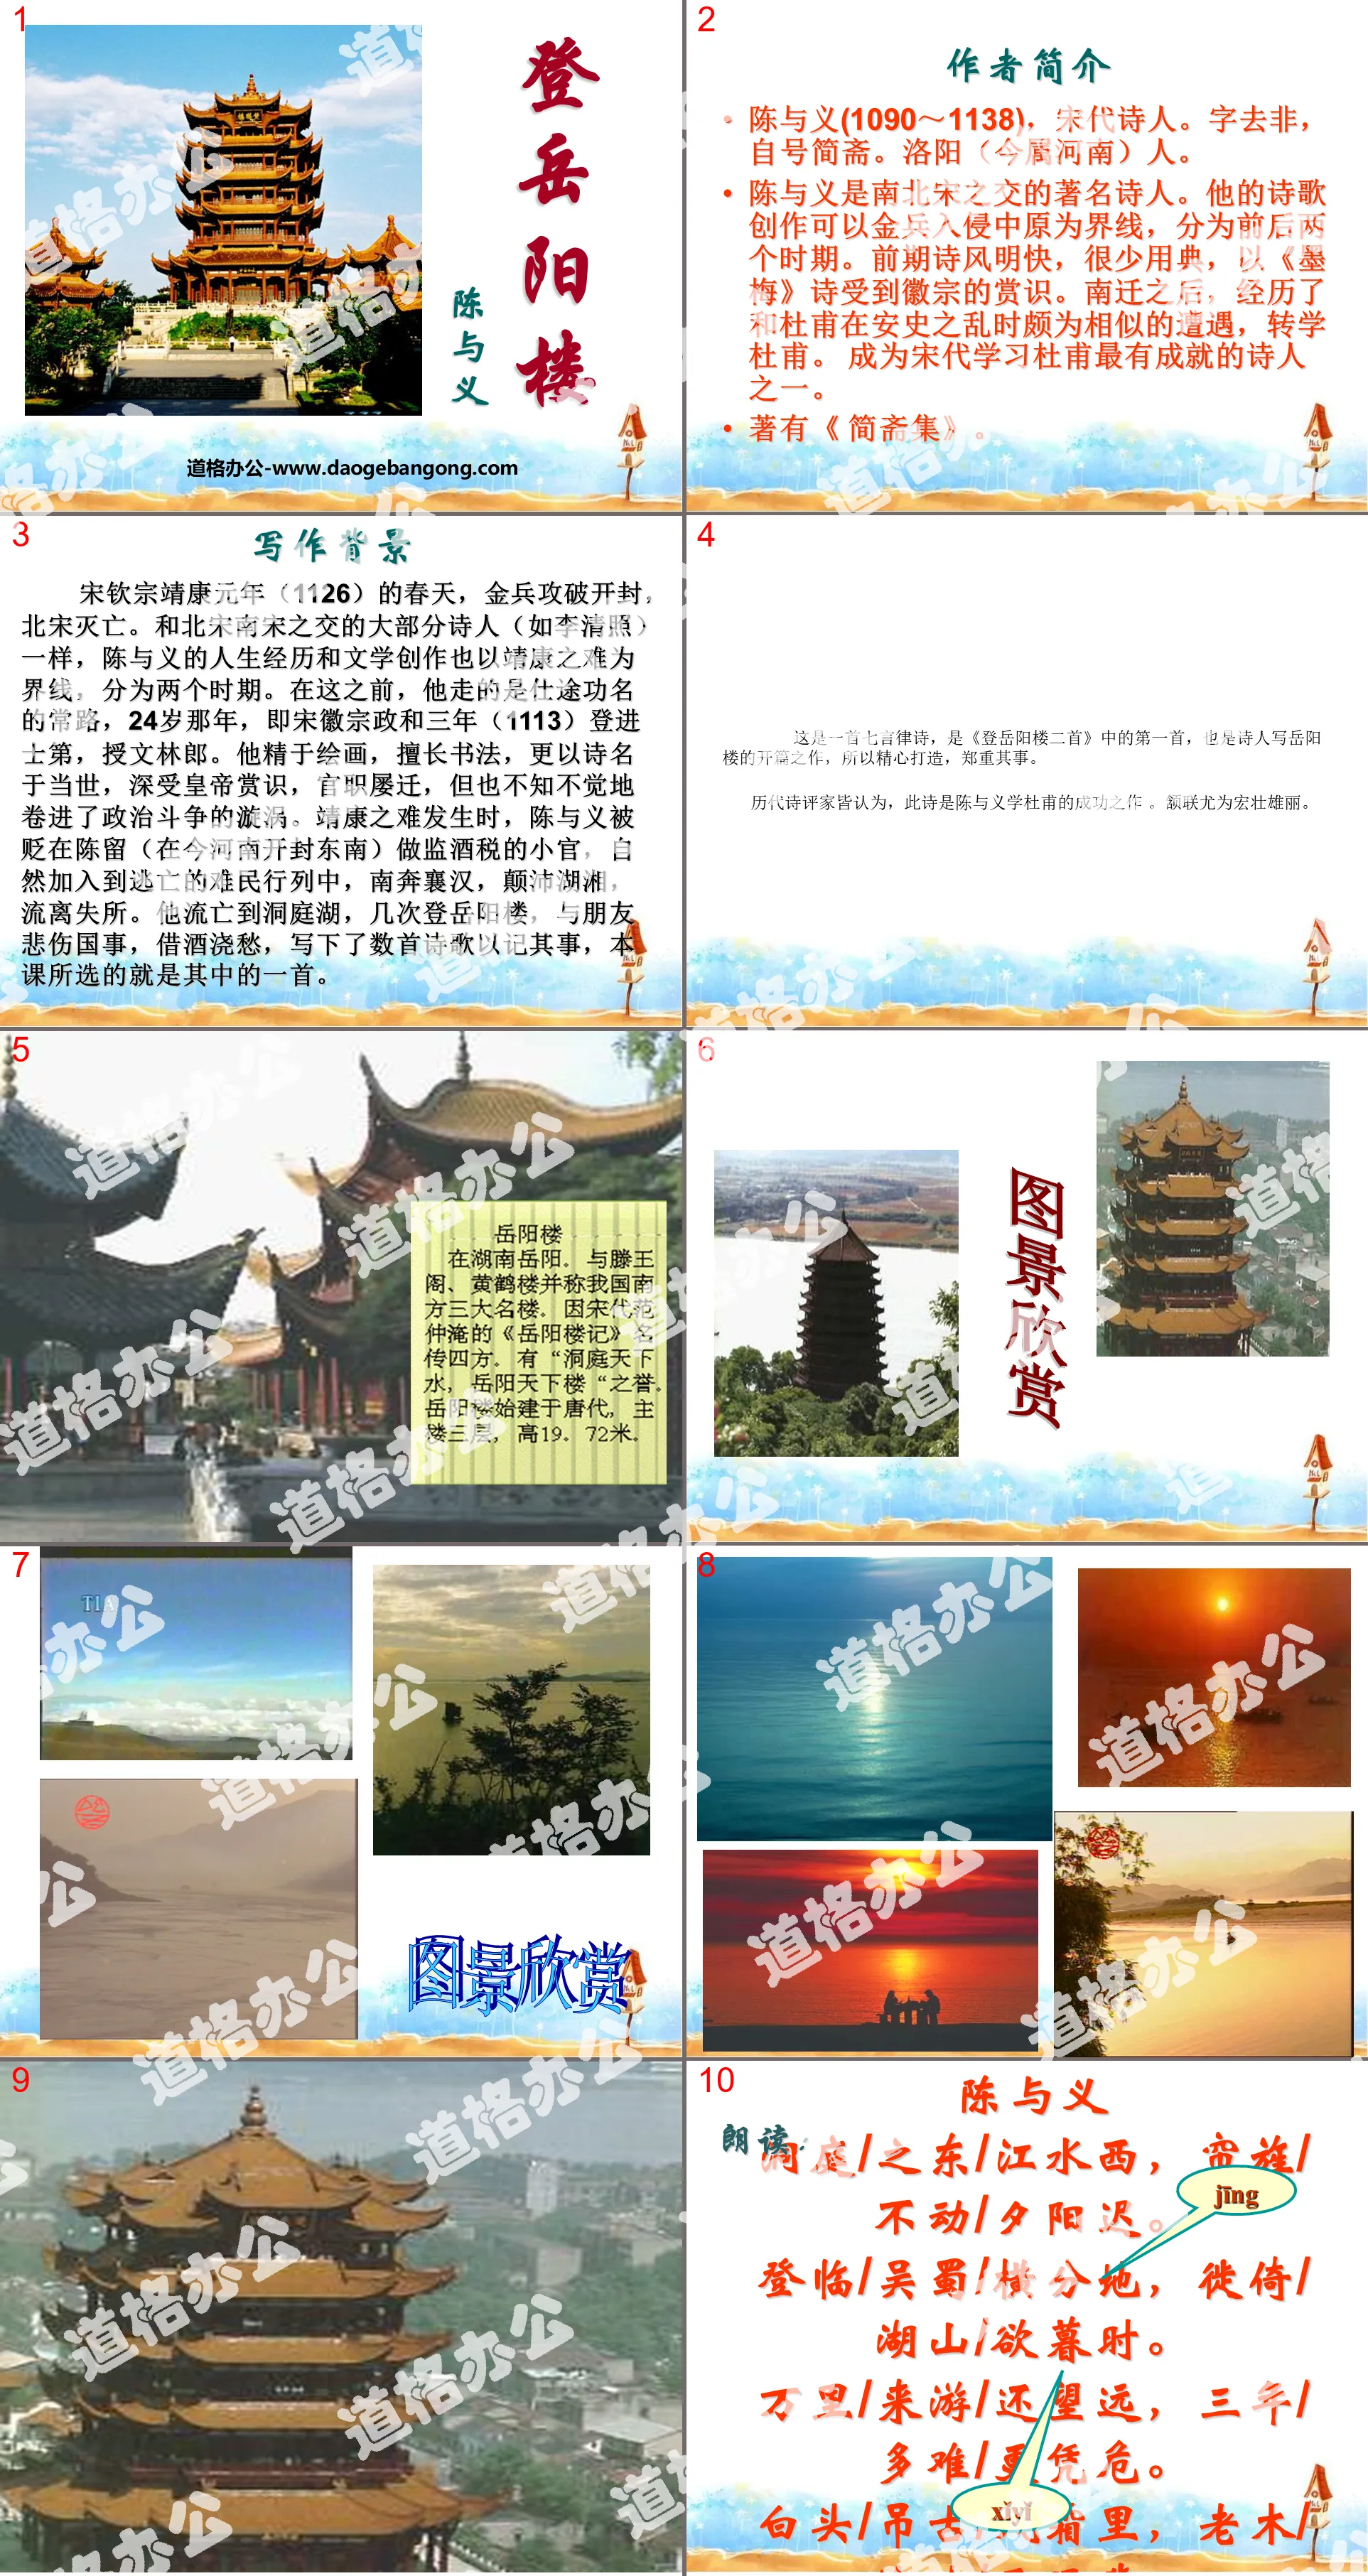 "Climbing Yueyang Tower" PPT courseware 4